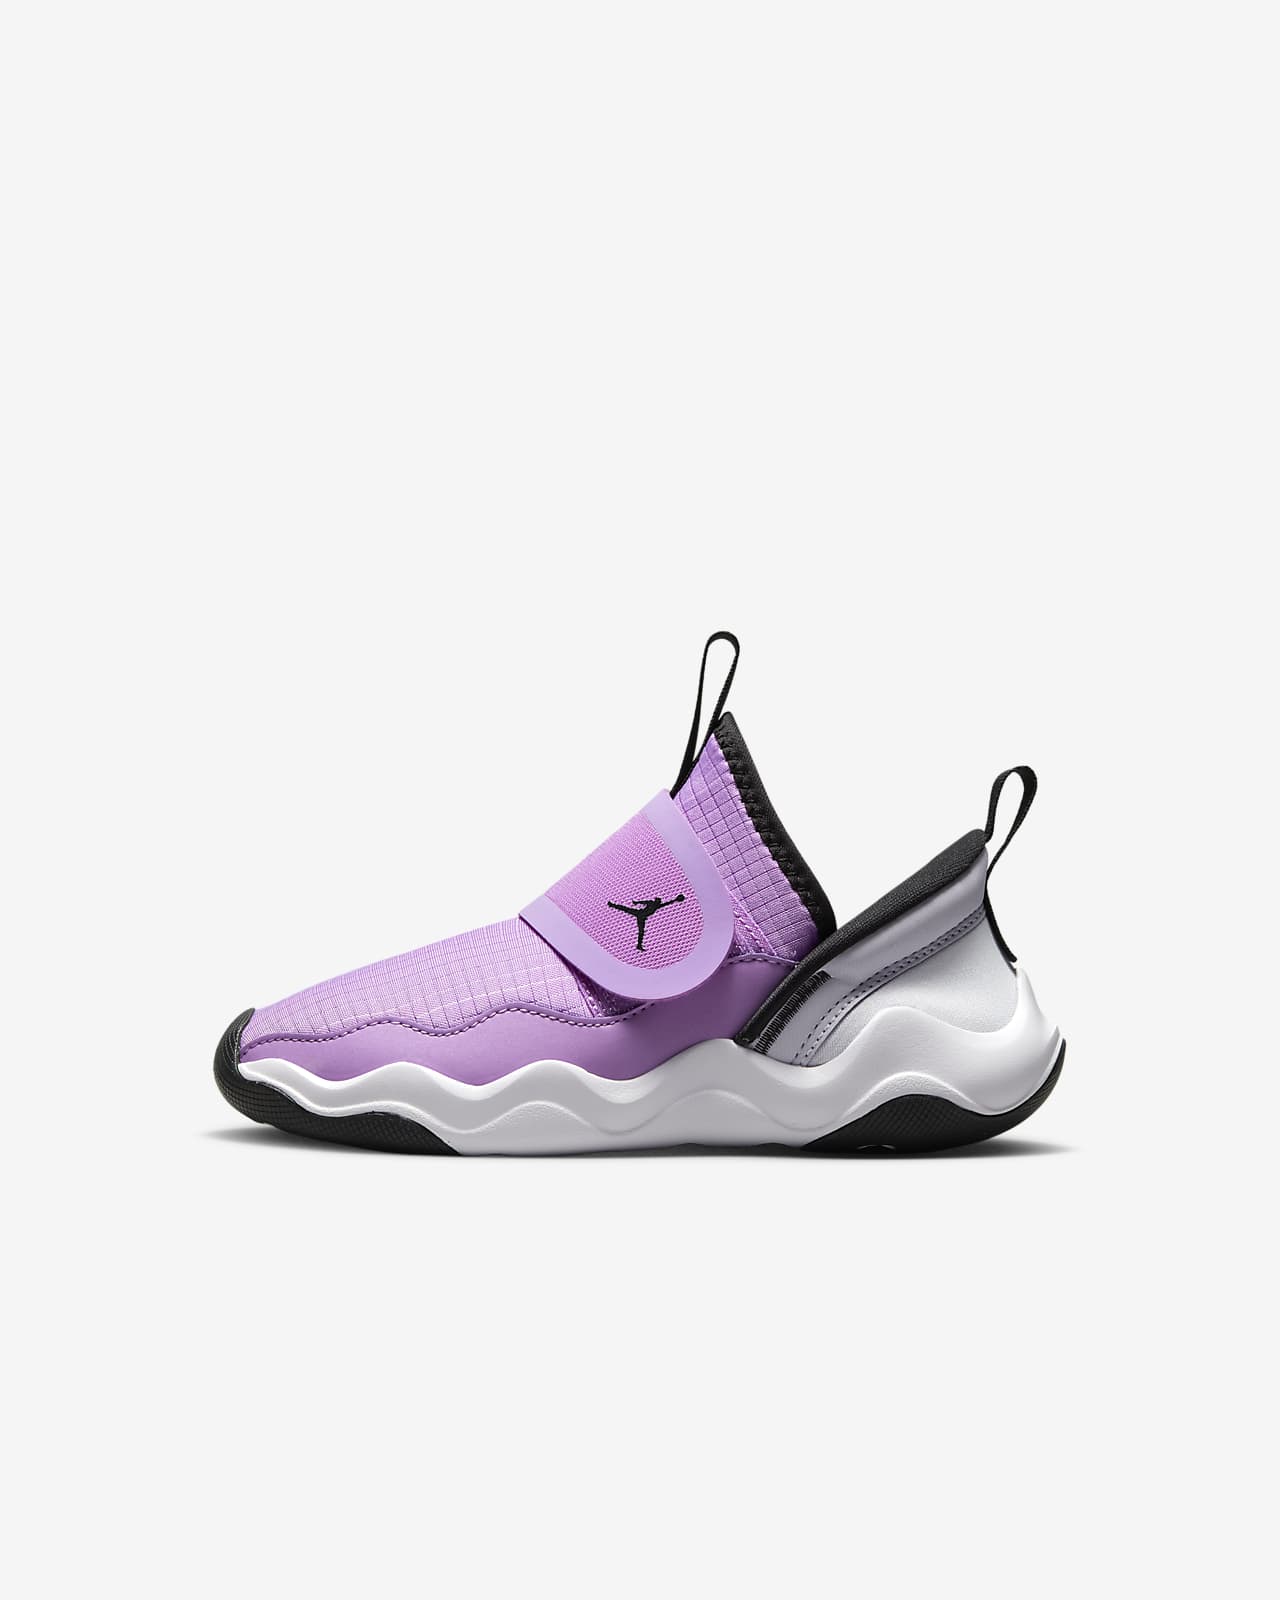 Jordan 23/7 Shoes. Nike LU